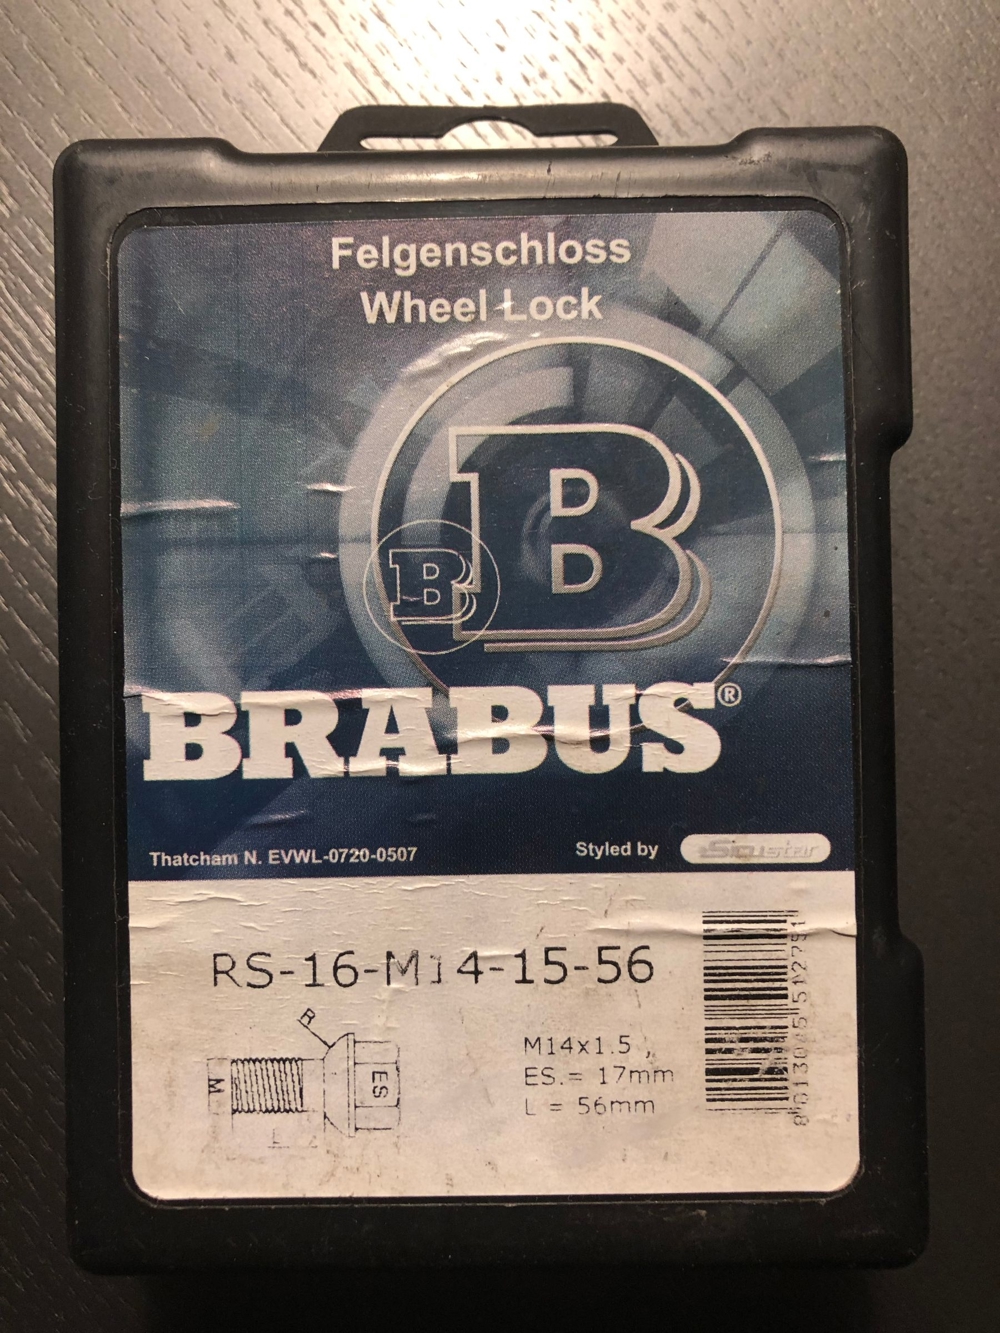 4x Brabus Felgenschlösser Wheel Lock, RS-16-M14-15-56, PKW, Auto, Felgen, Security,